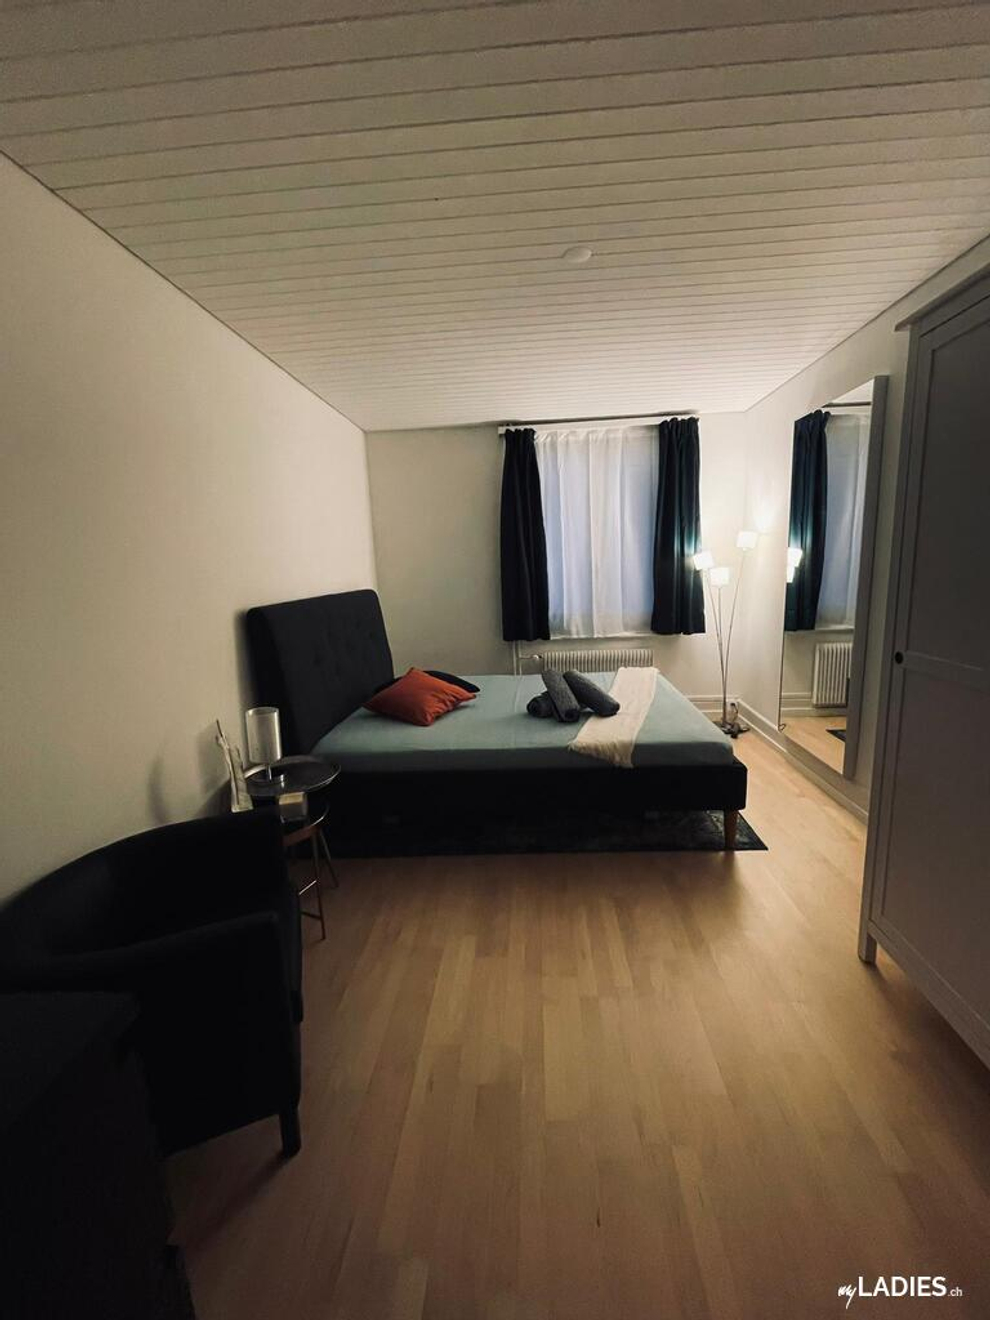 Zimmer / Rooms / Habitaciones in Muttenz BL / Bild 3